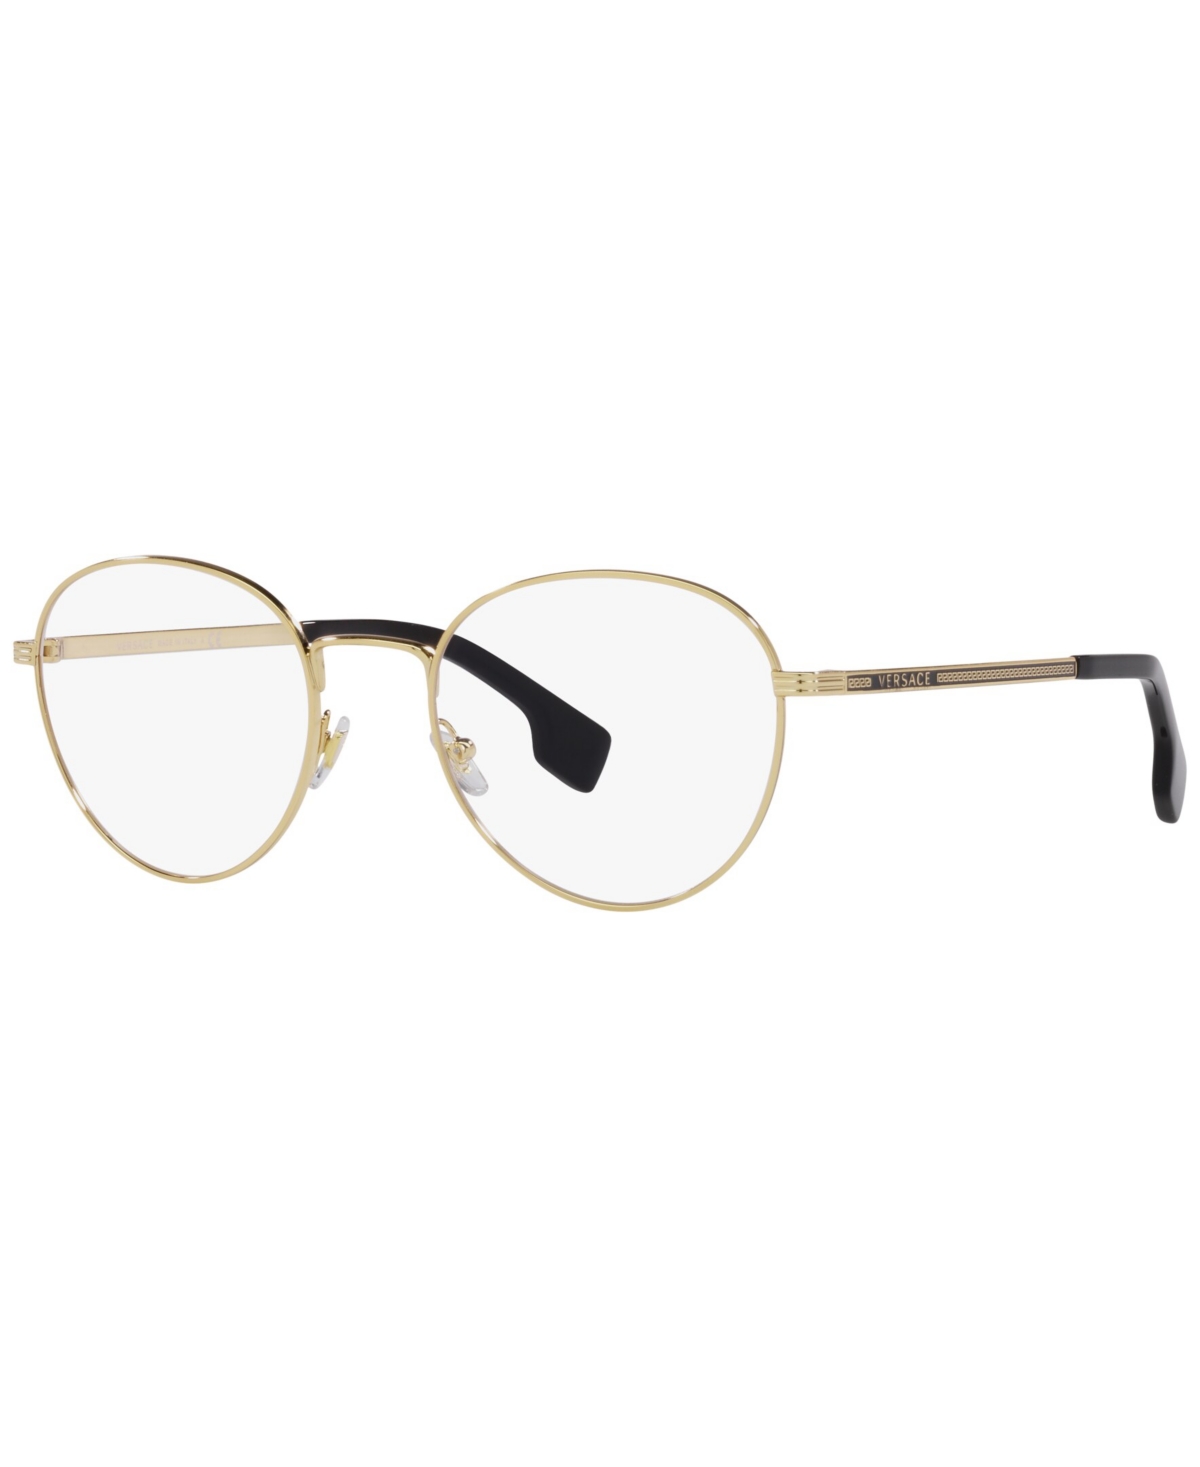 Men's Phantos Eyeglasses, VE127953-o - Gold Tone